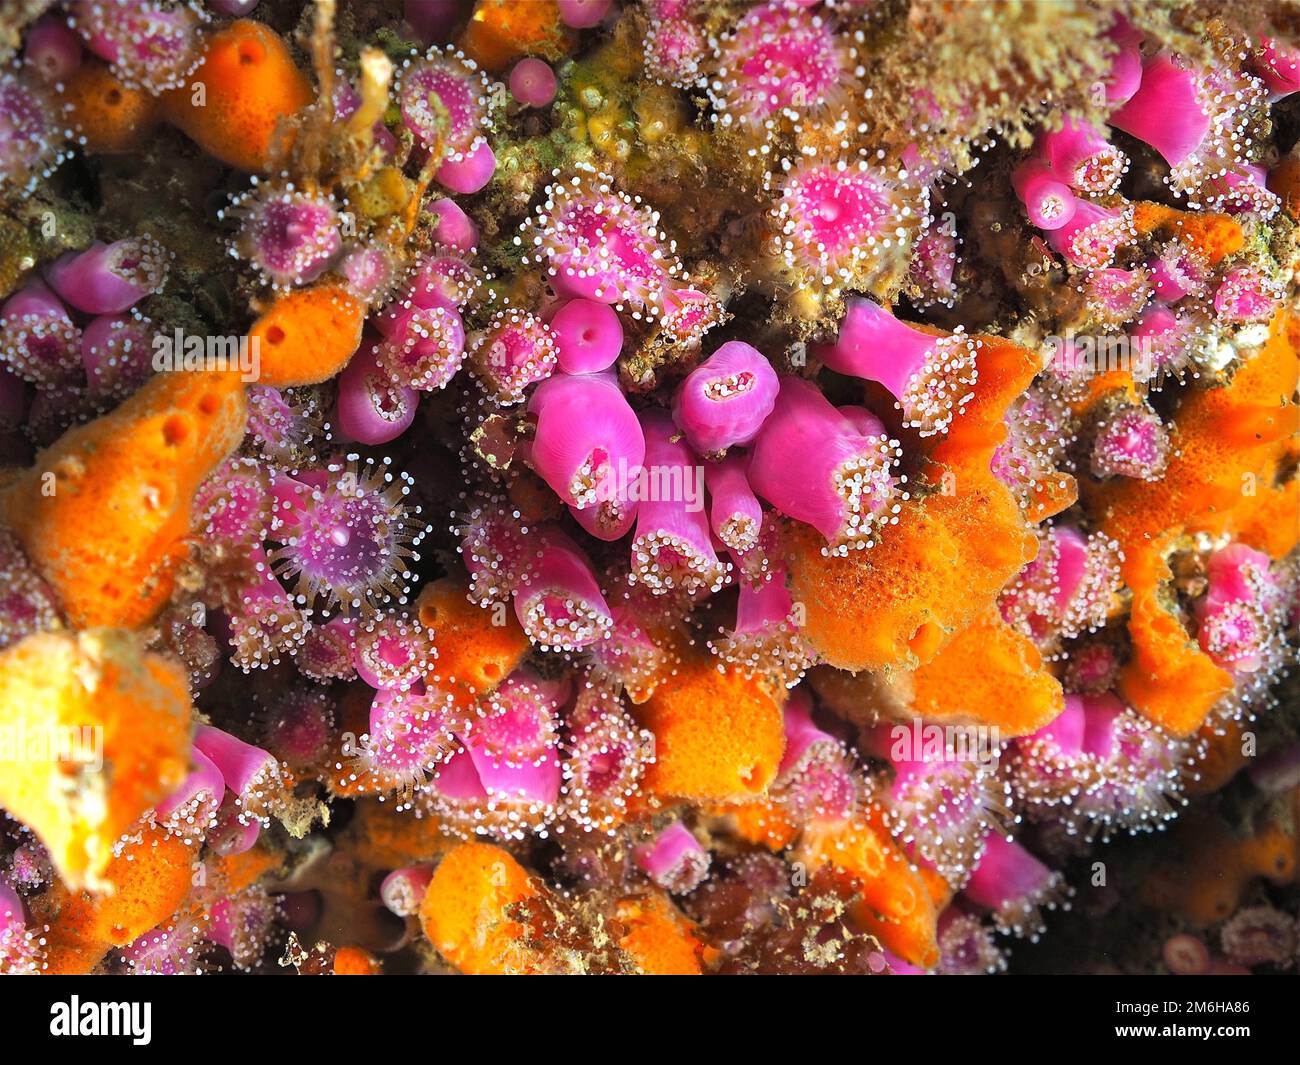 Pink jewel anemone (Corynactis viridis) Sea anemone. Dive site Maharees Islands, Castlegregory, Co. Kerry, Irish Sea, North Atlantic, Ireland Stock Photo